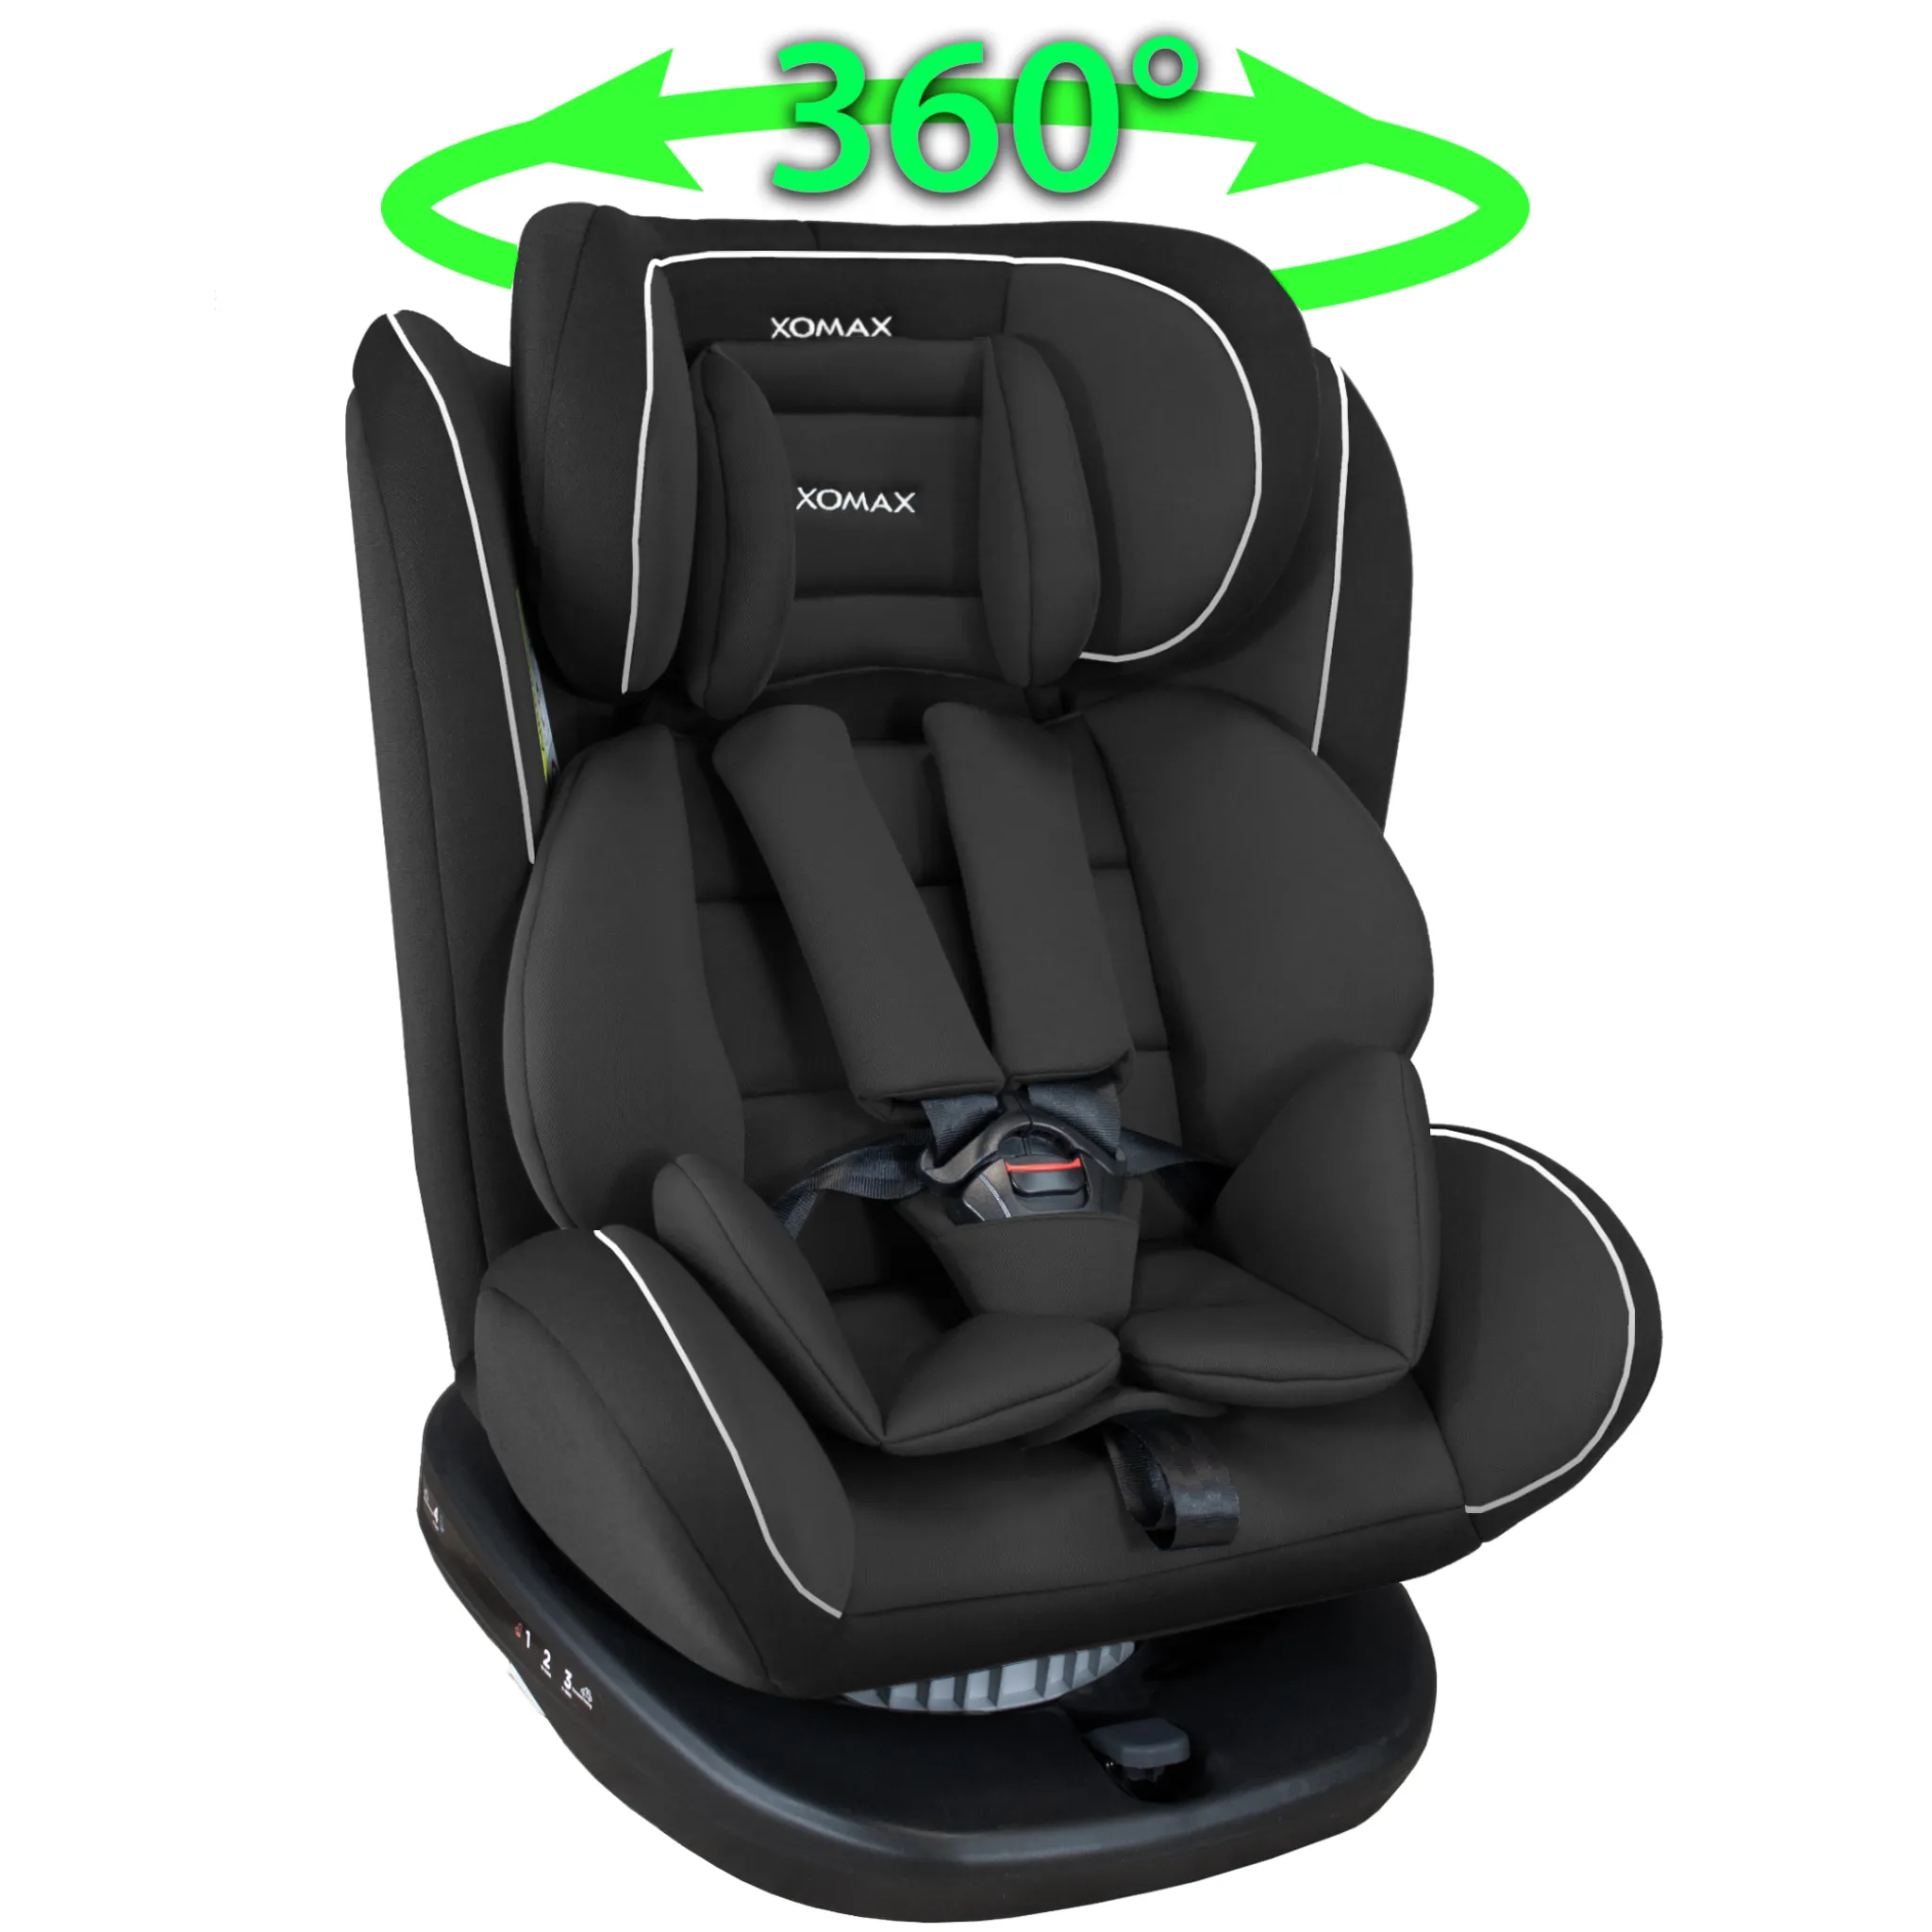 Autogurt Verlängerung Kindersitz